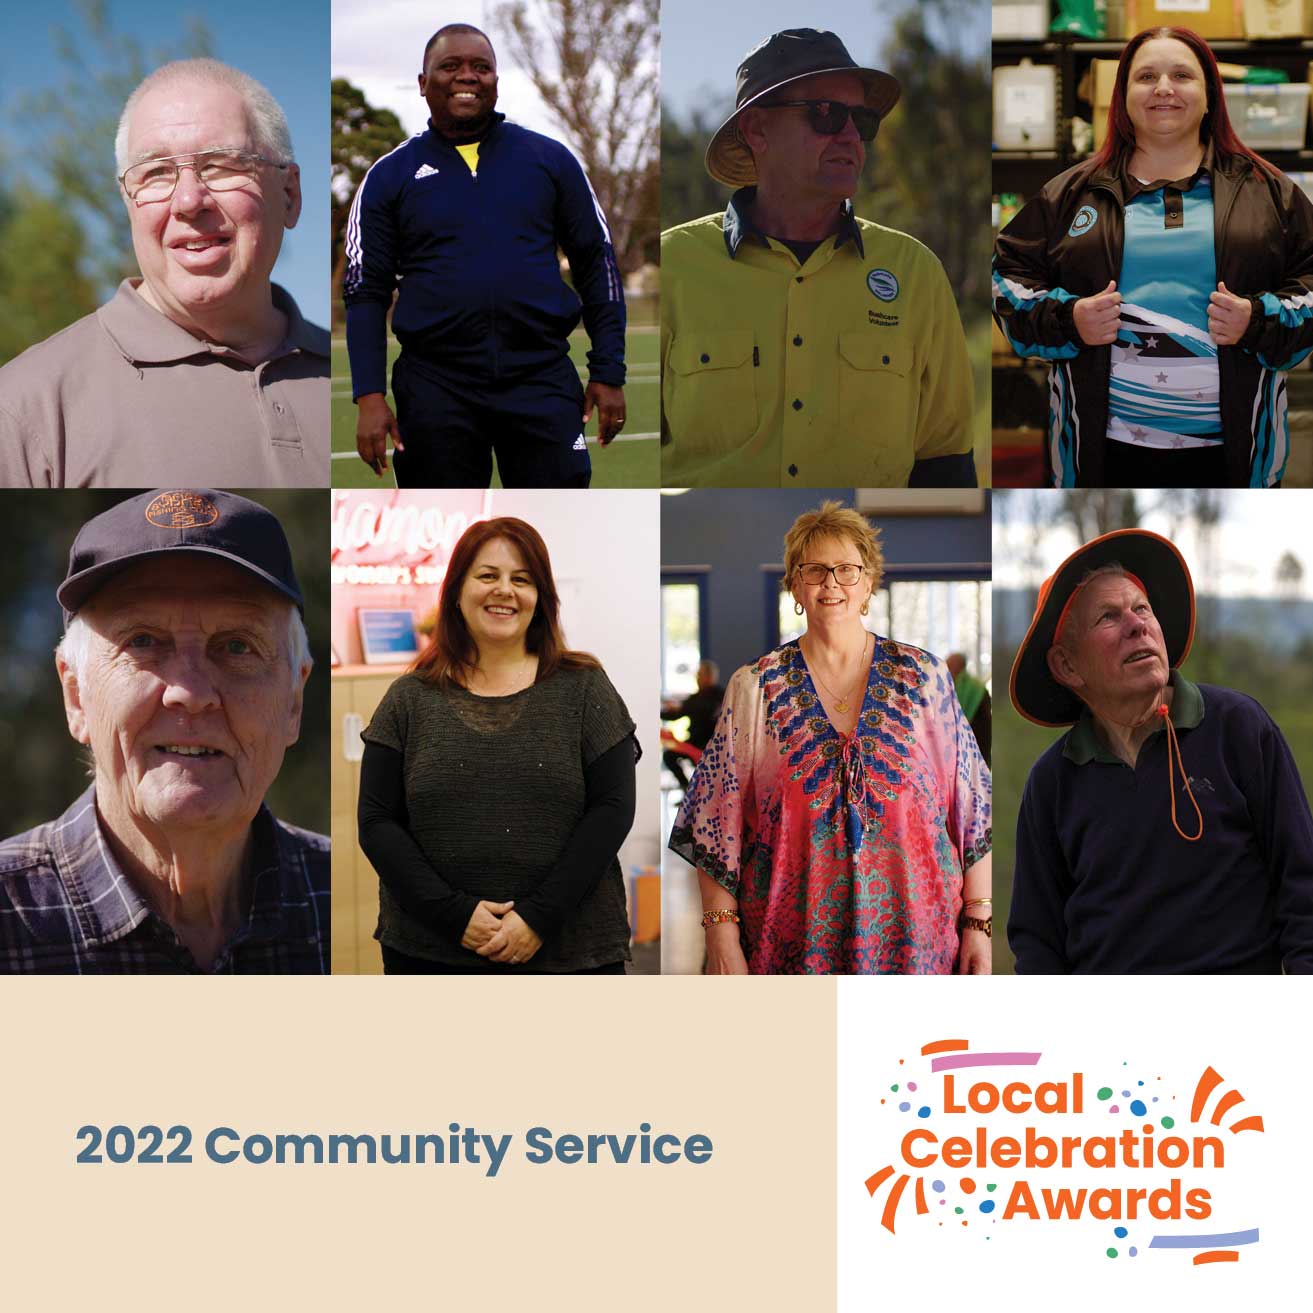 Community Service Award winners